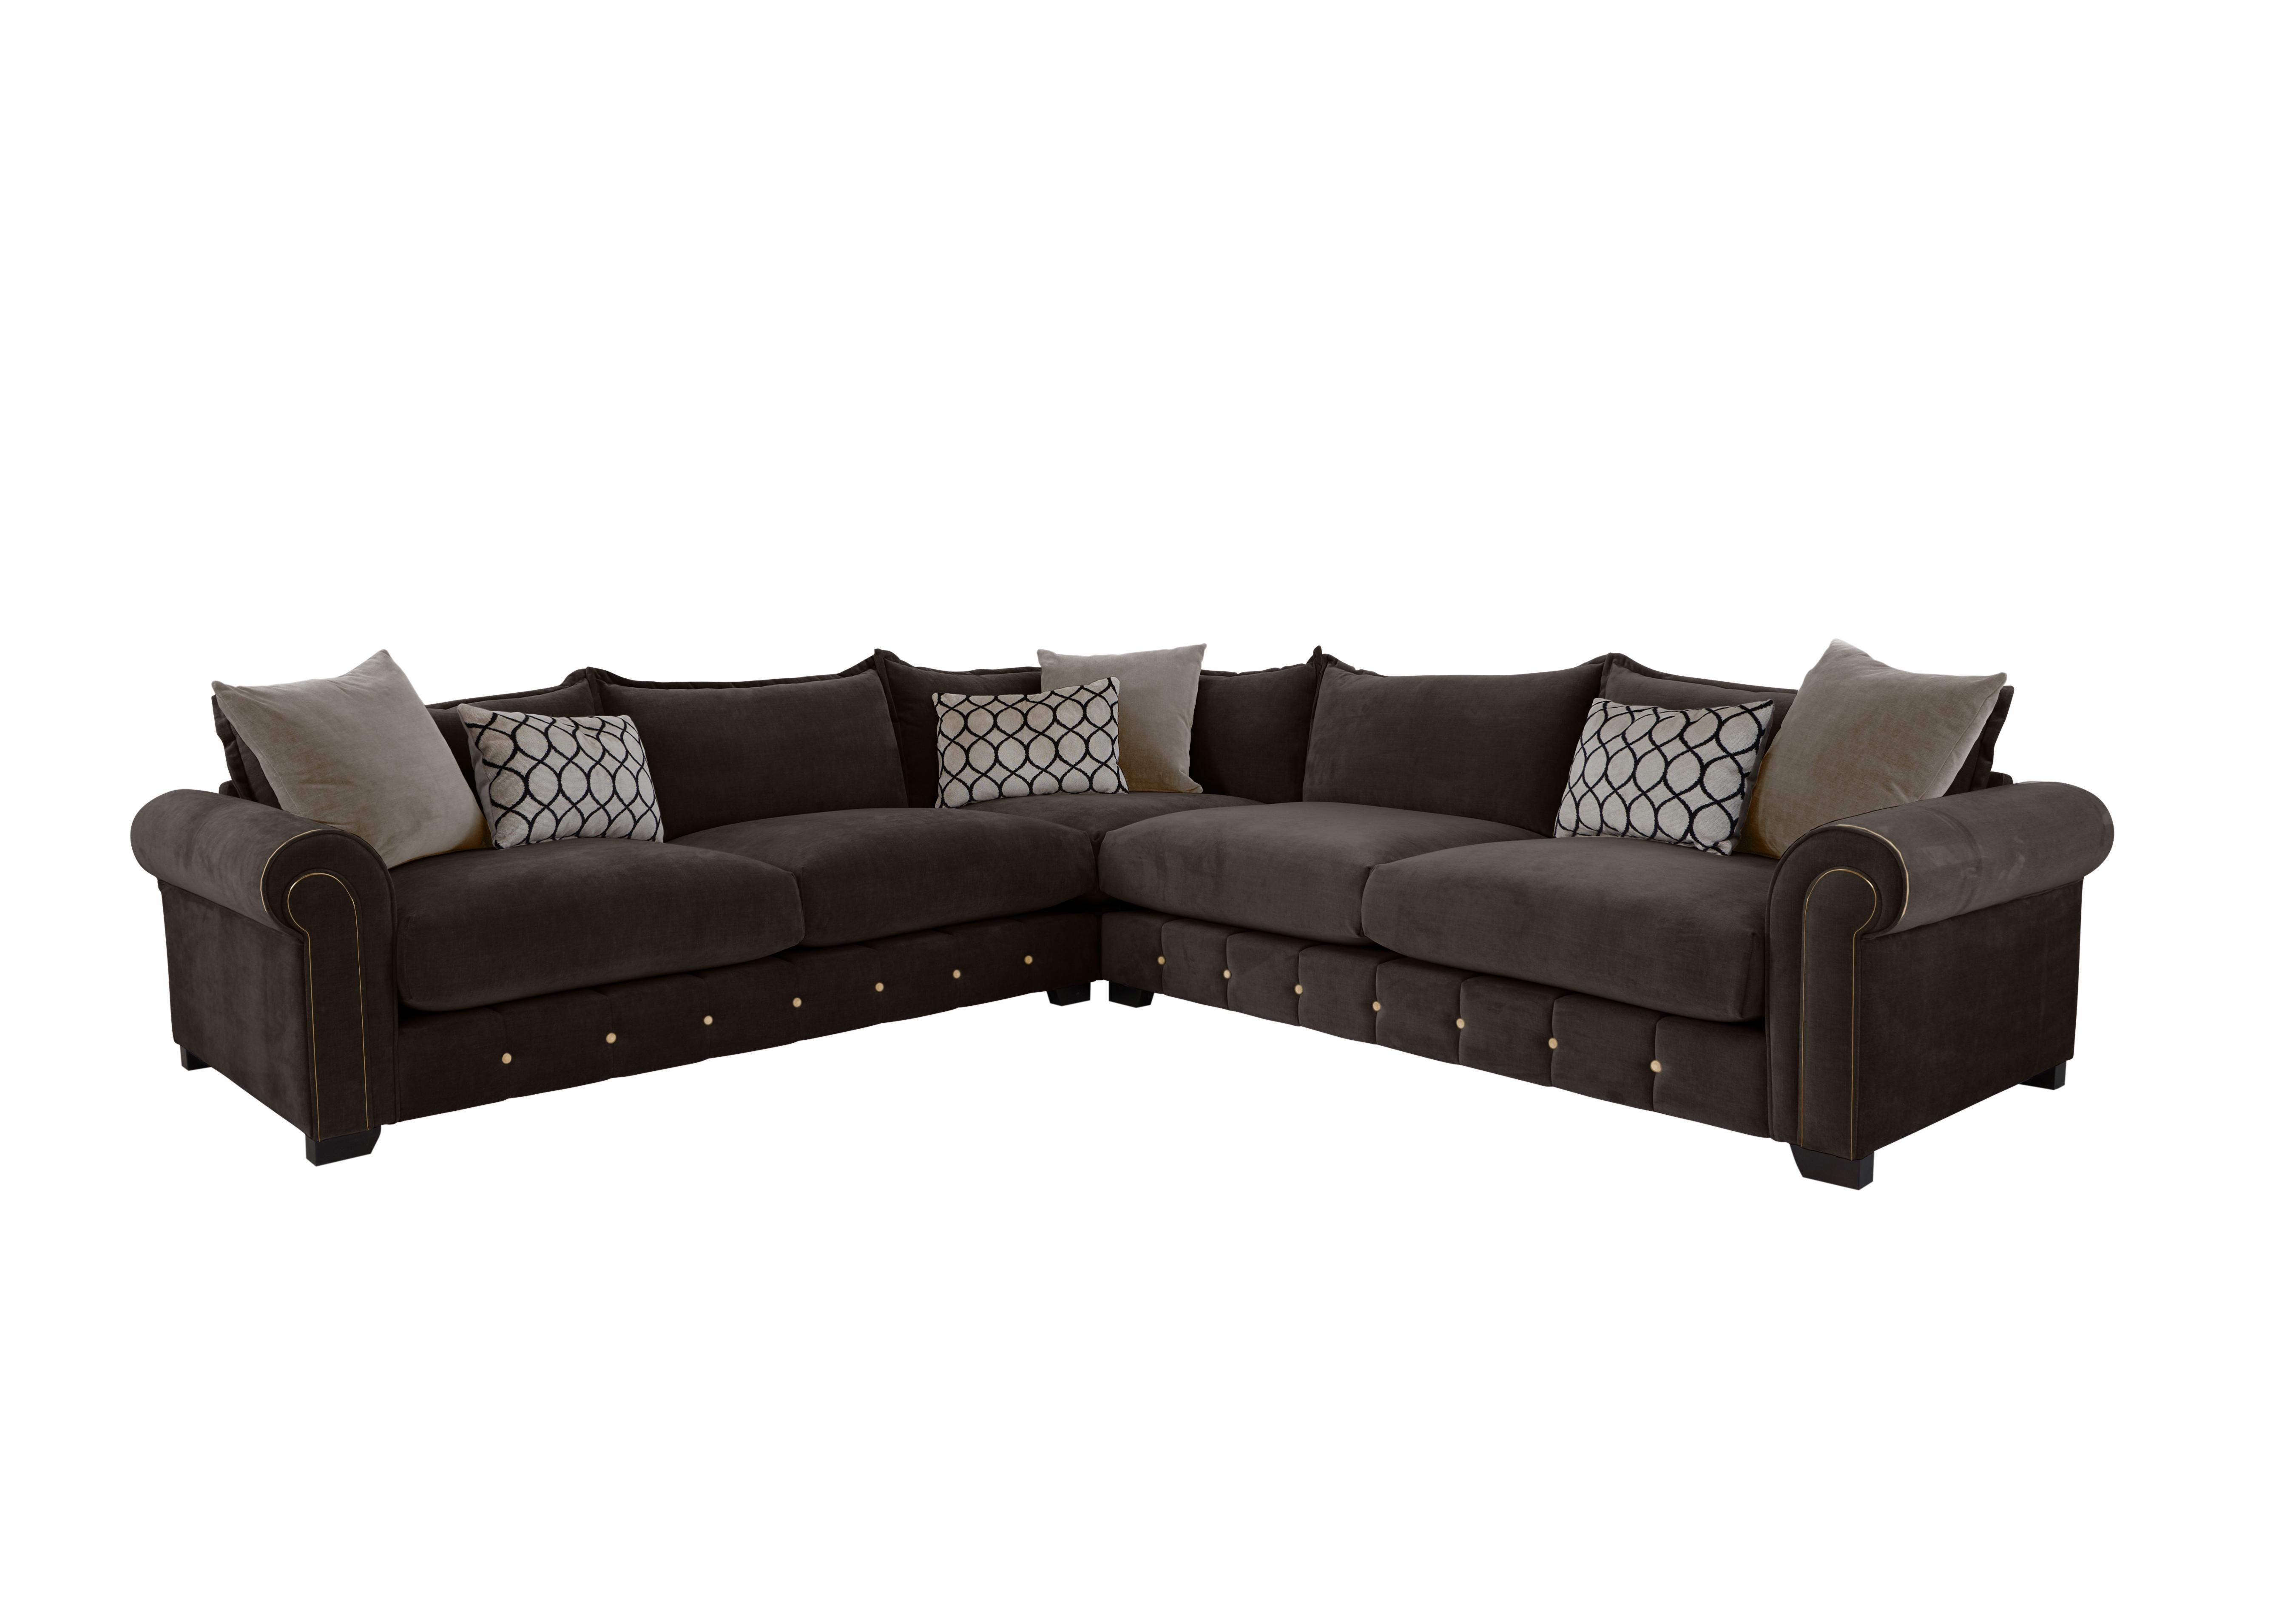 Sumptuous Large Fabric Corner Sofa in Chamonix Mocha Dk/Gold on Furniture Village